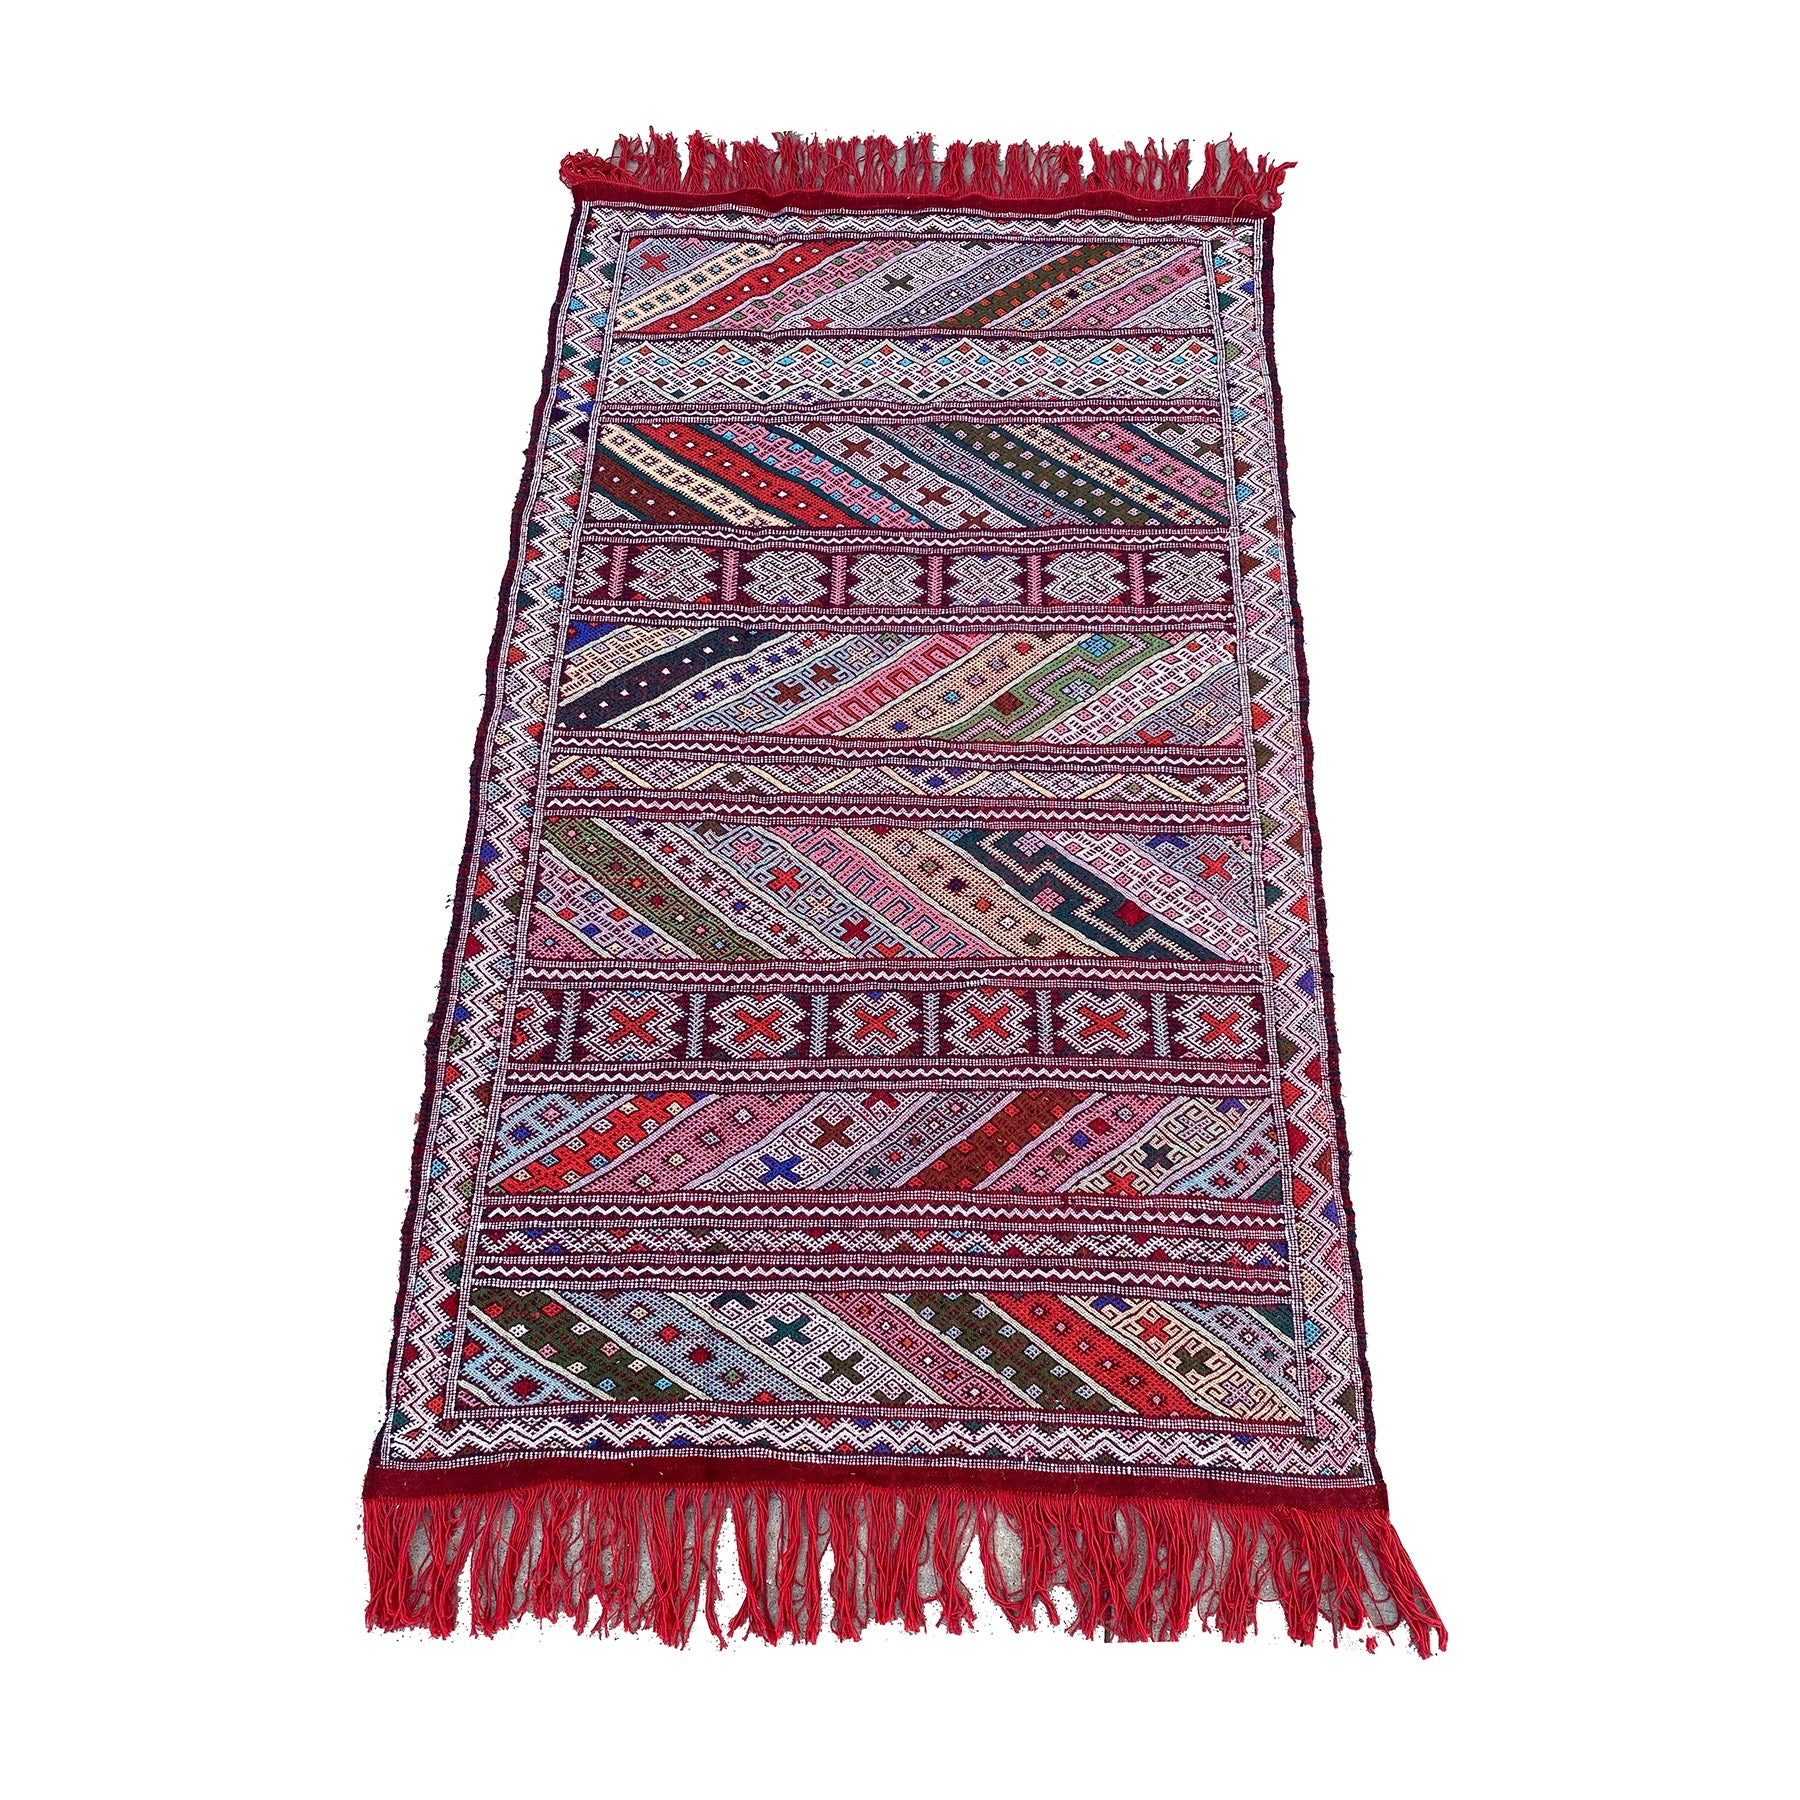 Red and pink flatwoven Moroccan kilim playroom rug - Kantara | Moroccan Rugs